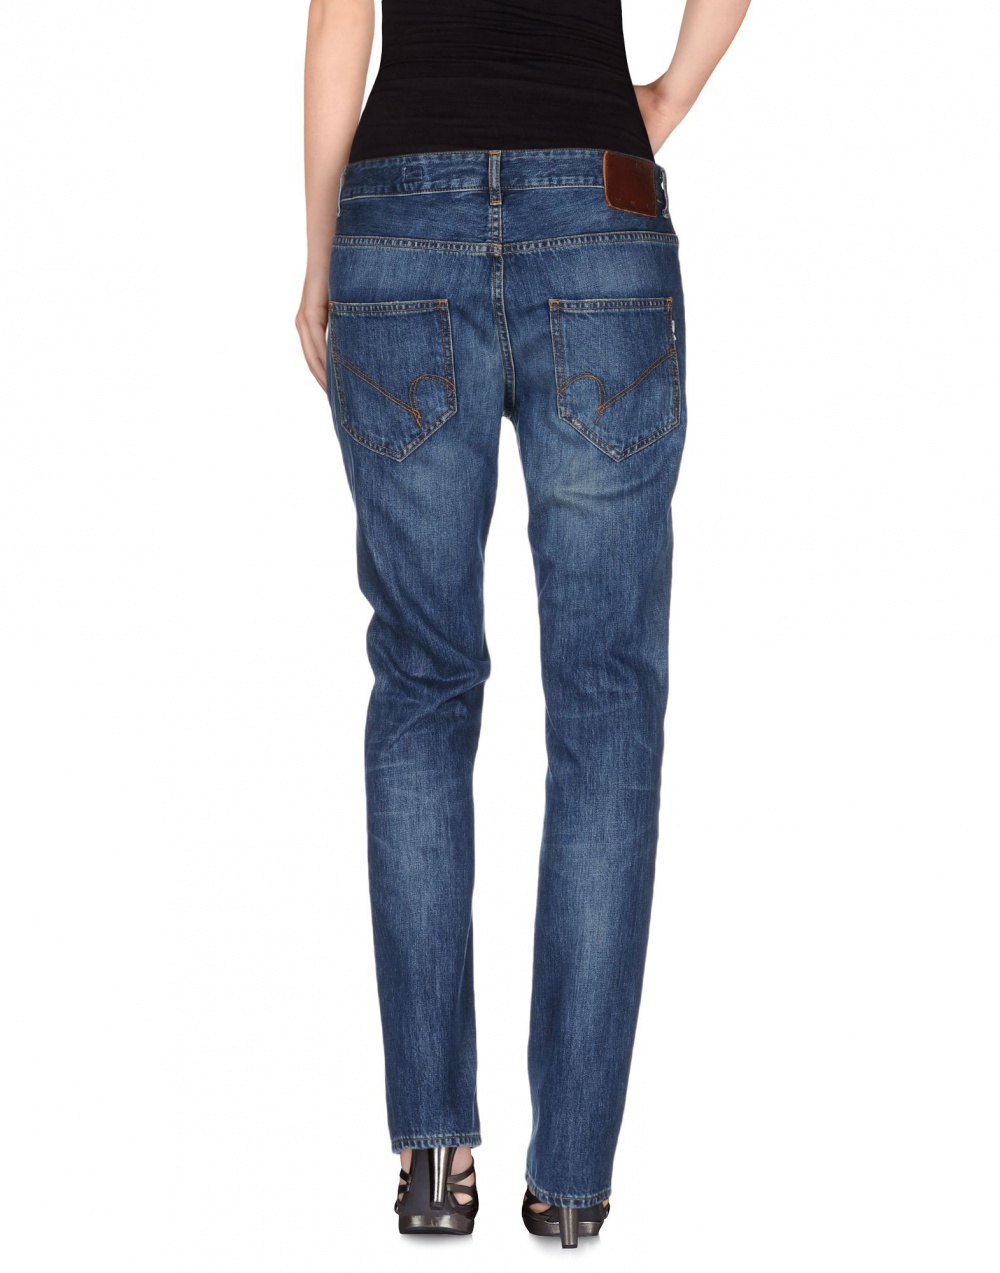 Новые джинсы VINTAGE 55 размер 28